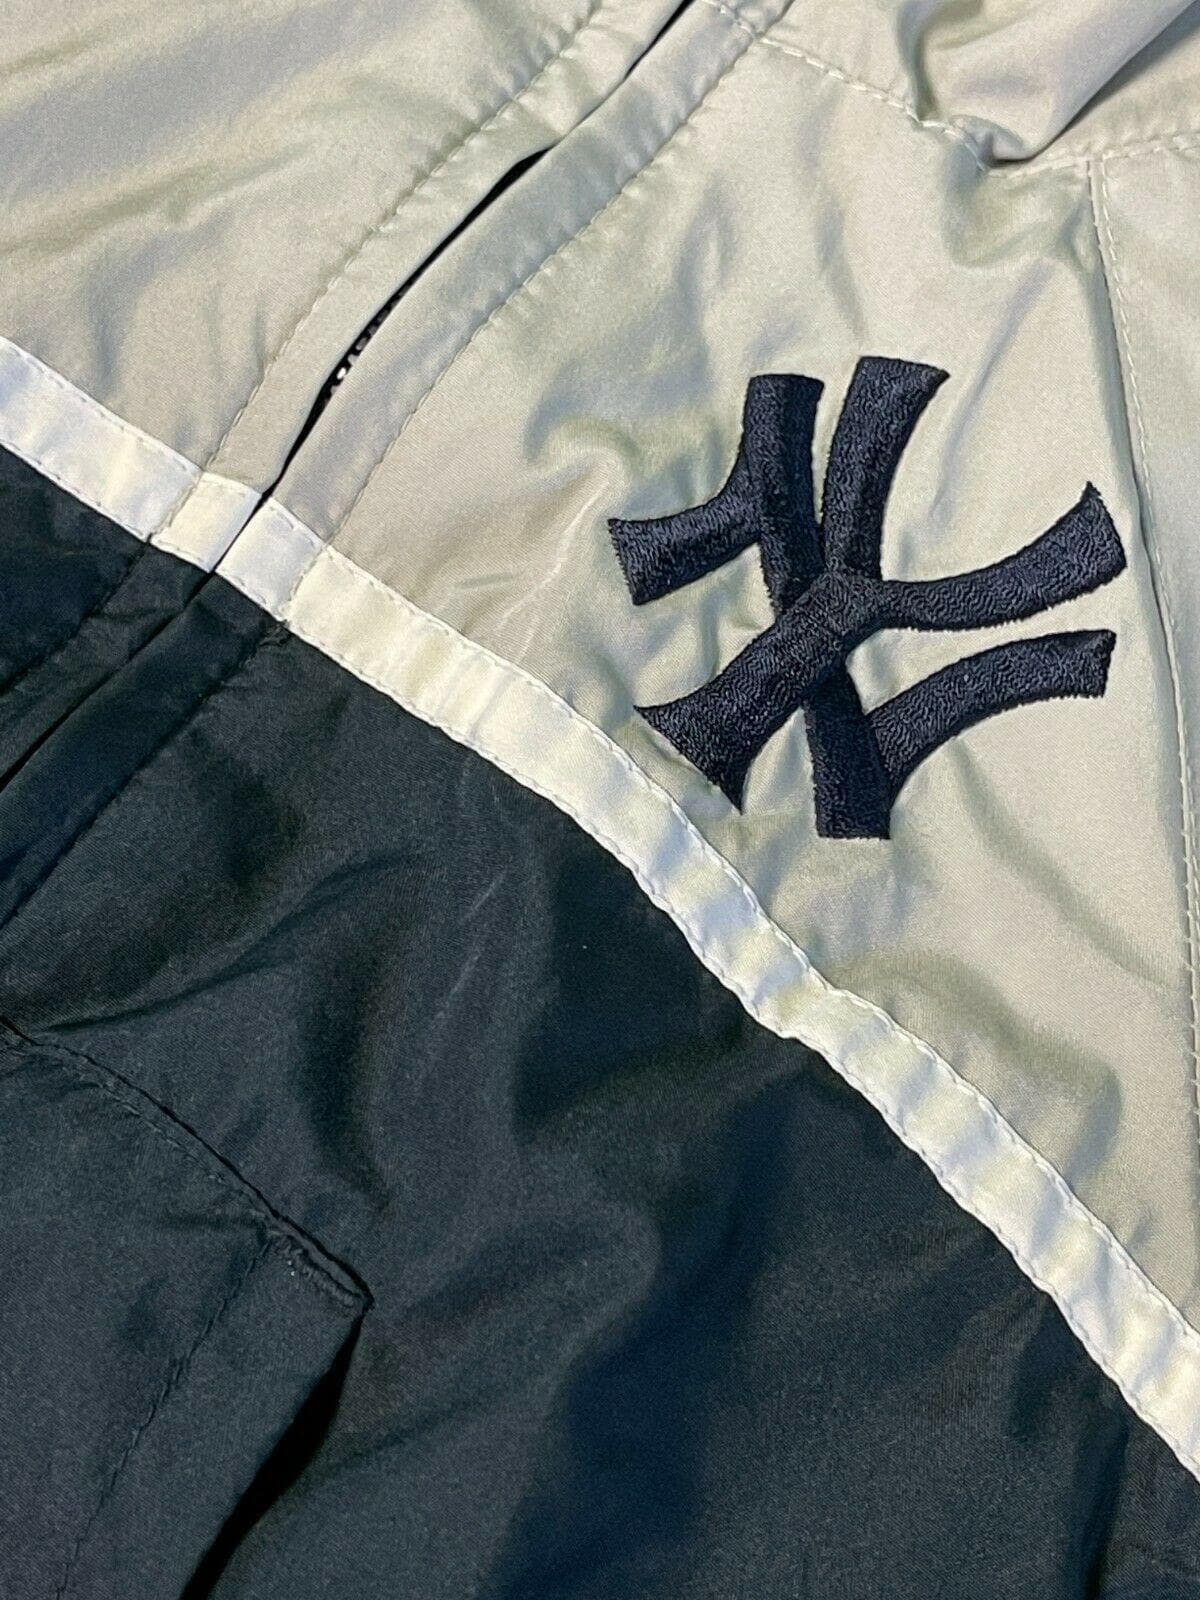 MLB New York Yankees Majestic Windbreaker Jacket Coat 3-6 months